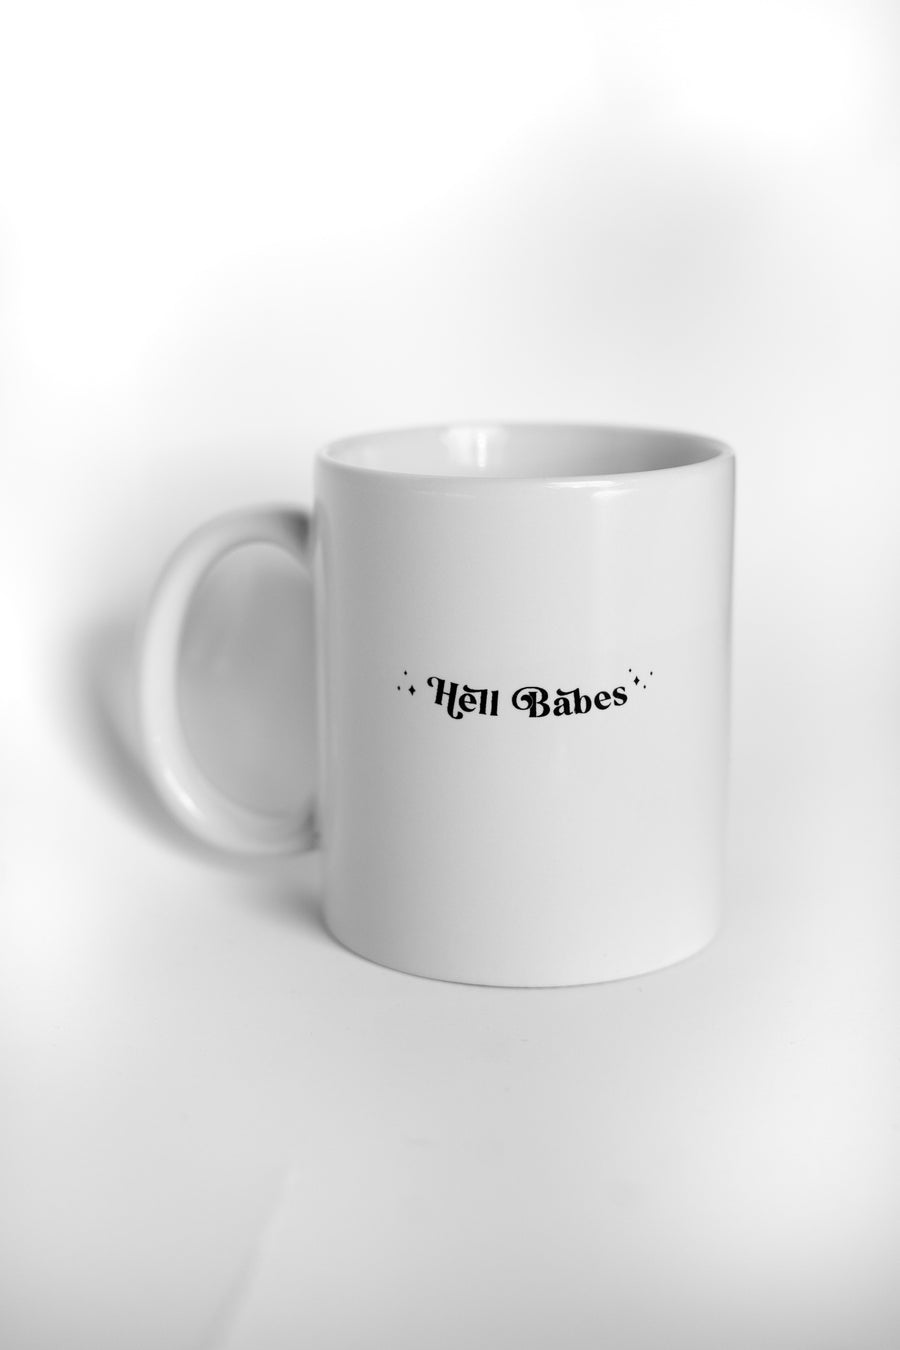 Manifesting Coffee Mug